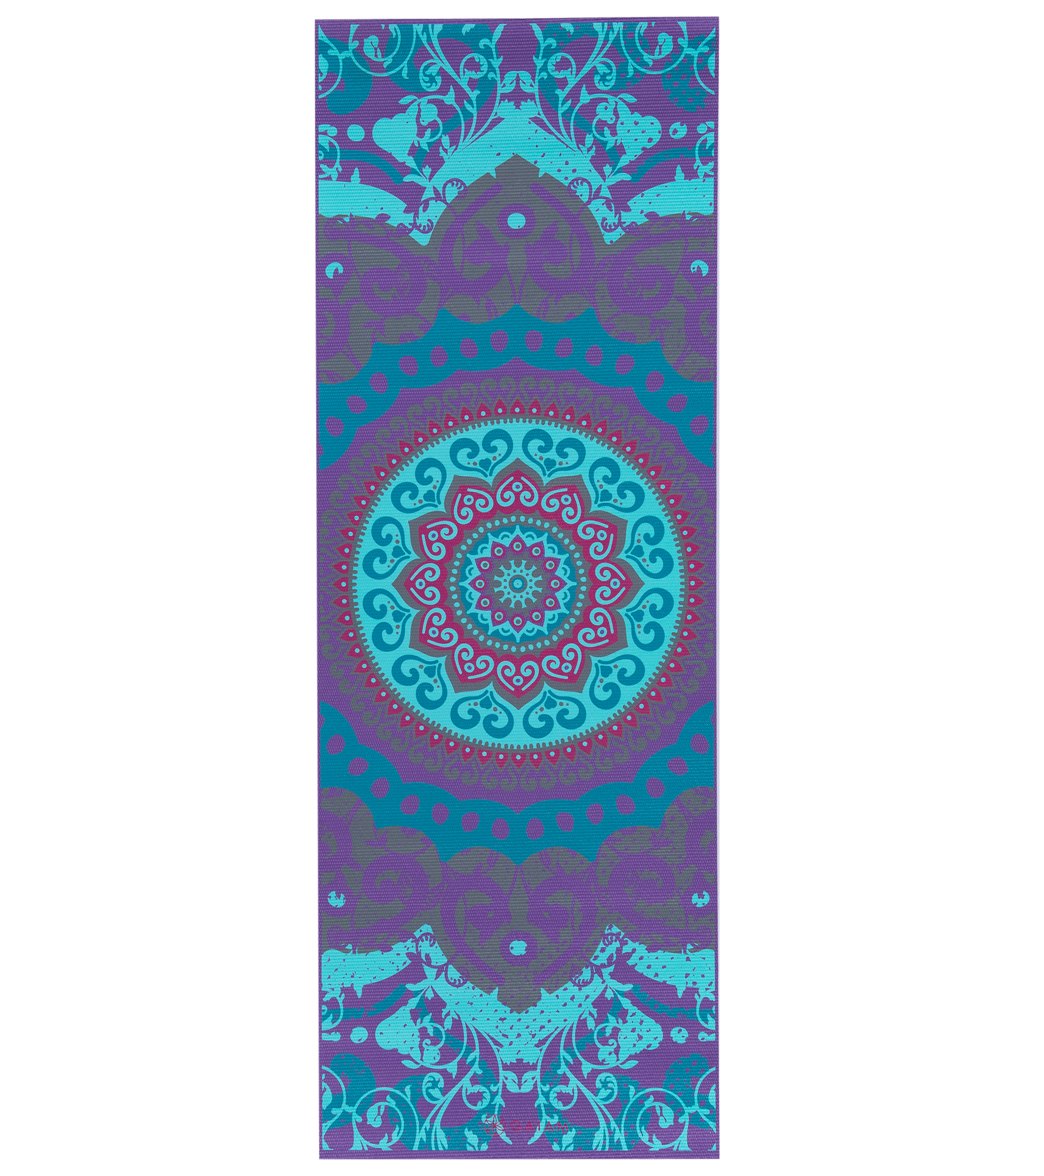 Gaiam Rubber Yoga Mat, Turquoise, 4-mm